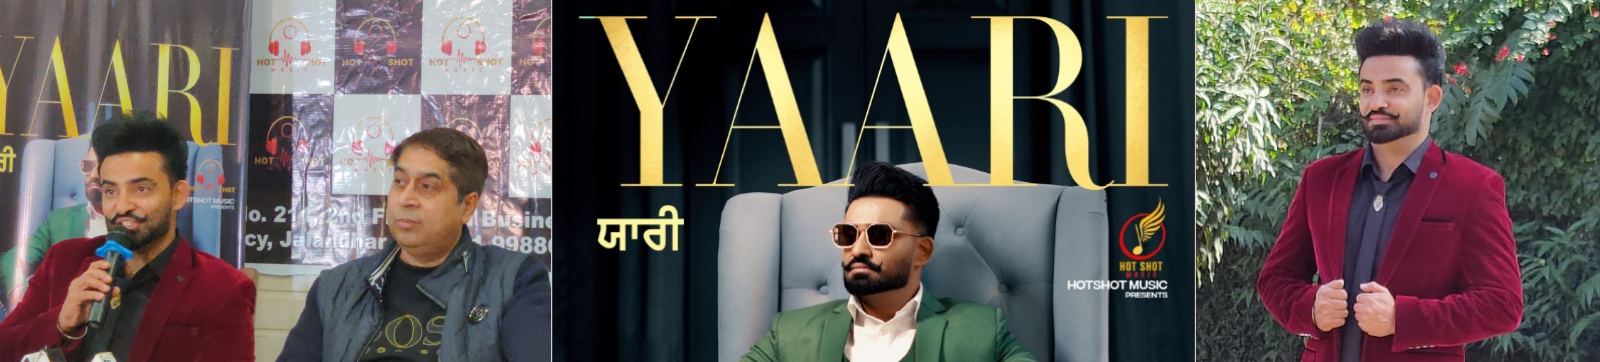 Resham Anmol Singh’s New Song Yaari Released in Chandigarh